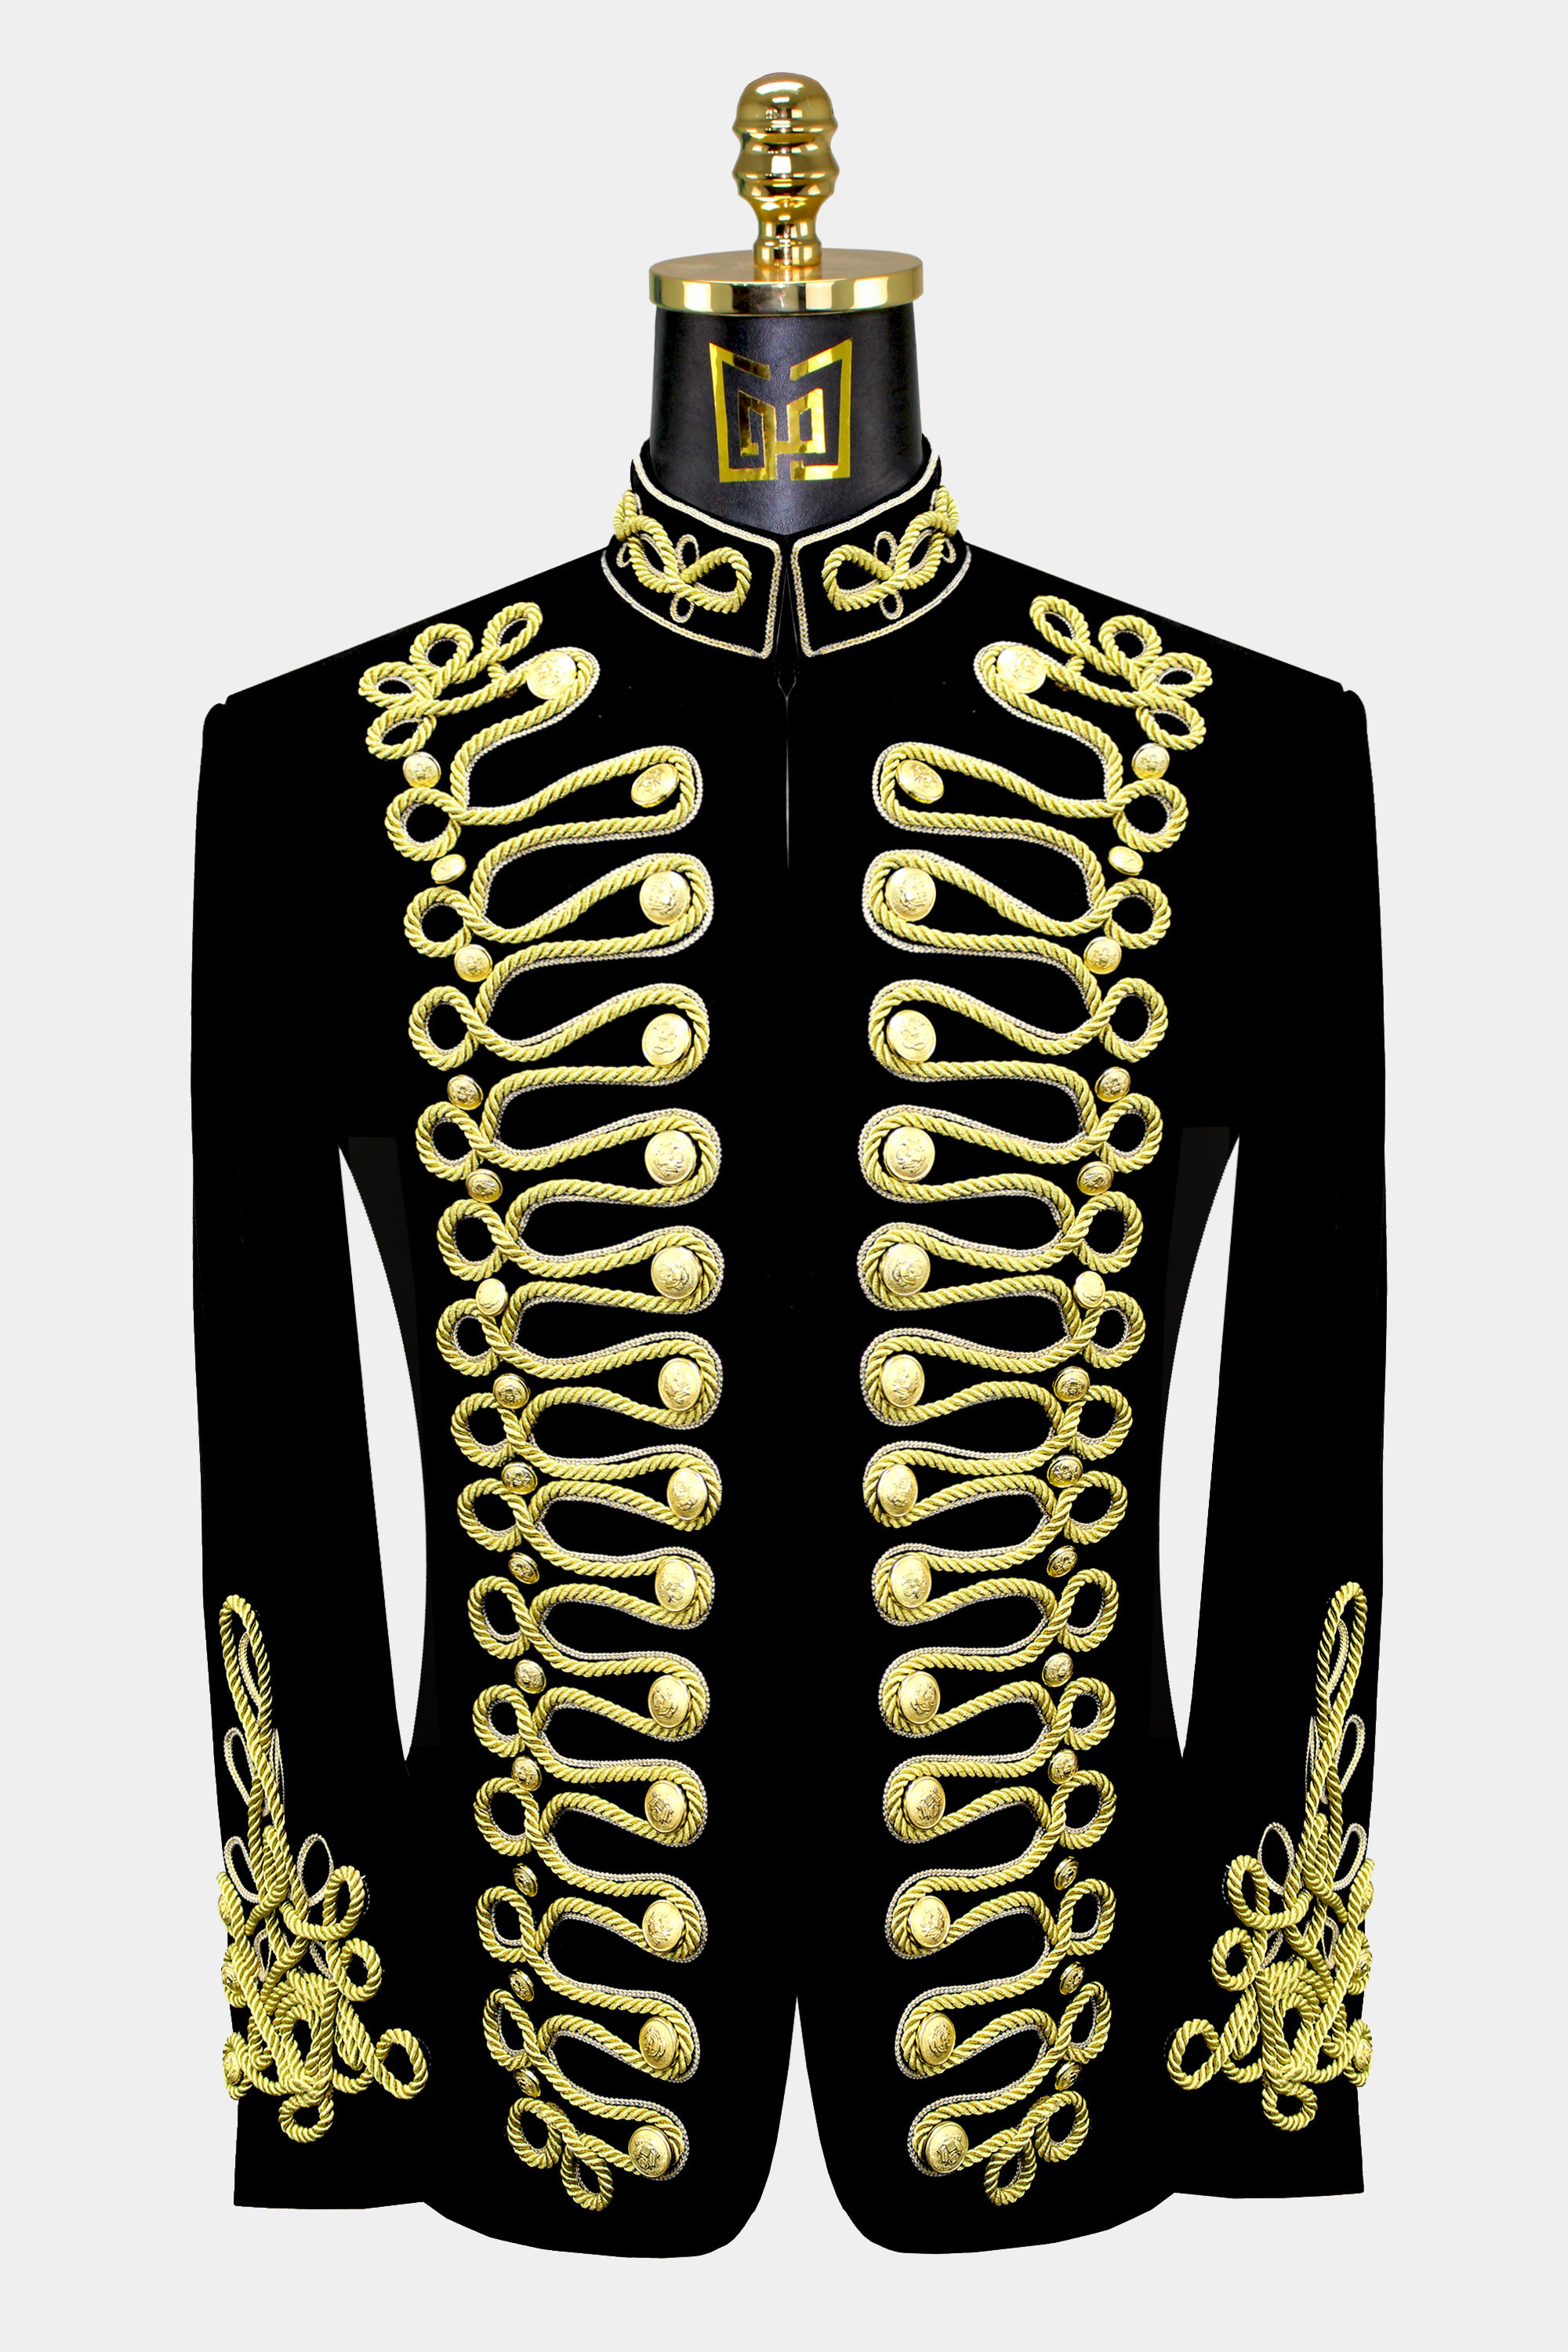 Mens-Black-and-Gold-Mandarin-Collar-Jacket-Prom-Wedding-Groom-Blazer-from-Gentlemansguru.com